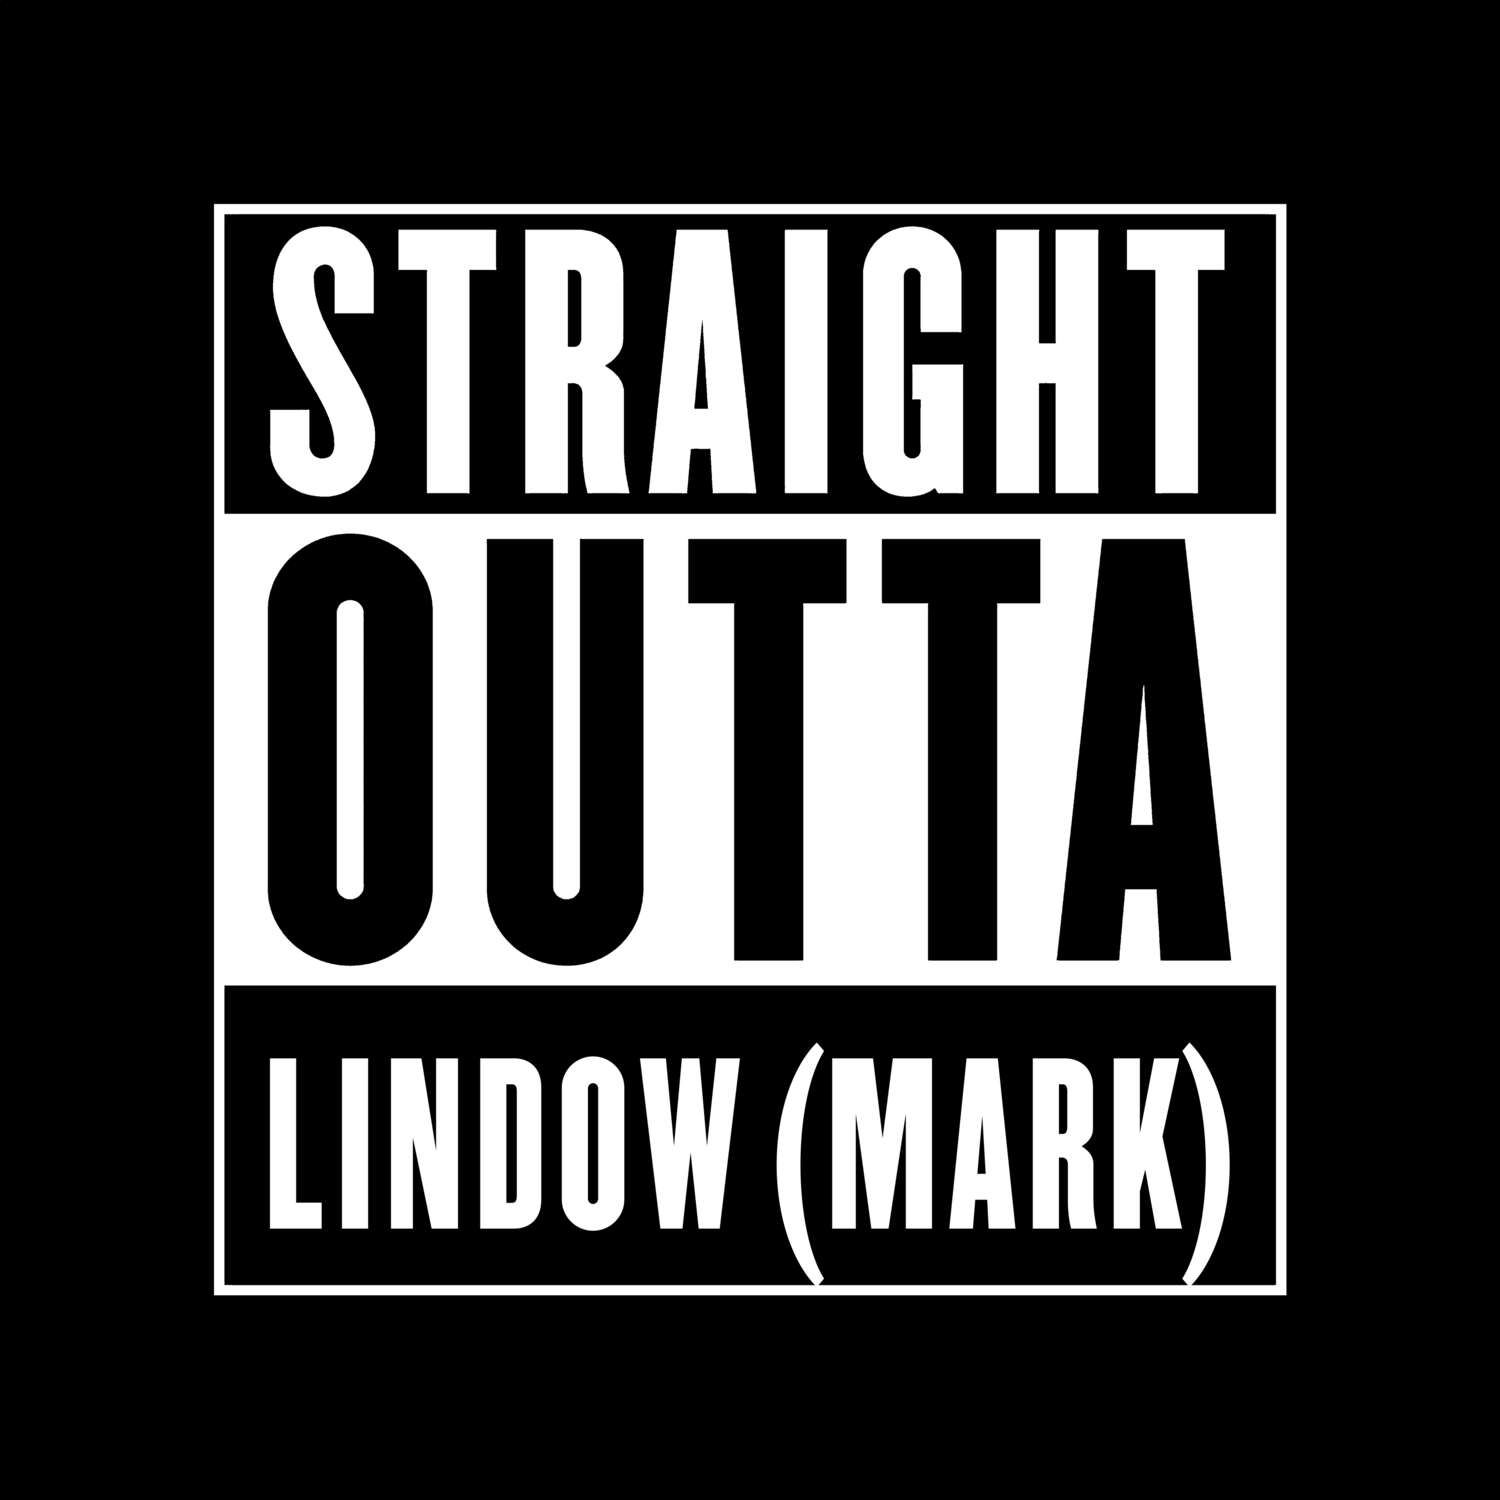 Lindow (Mark) T-Shirt »Straight Outta«